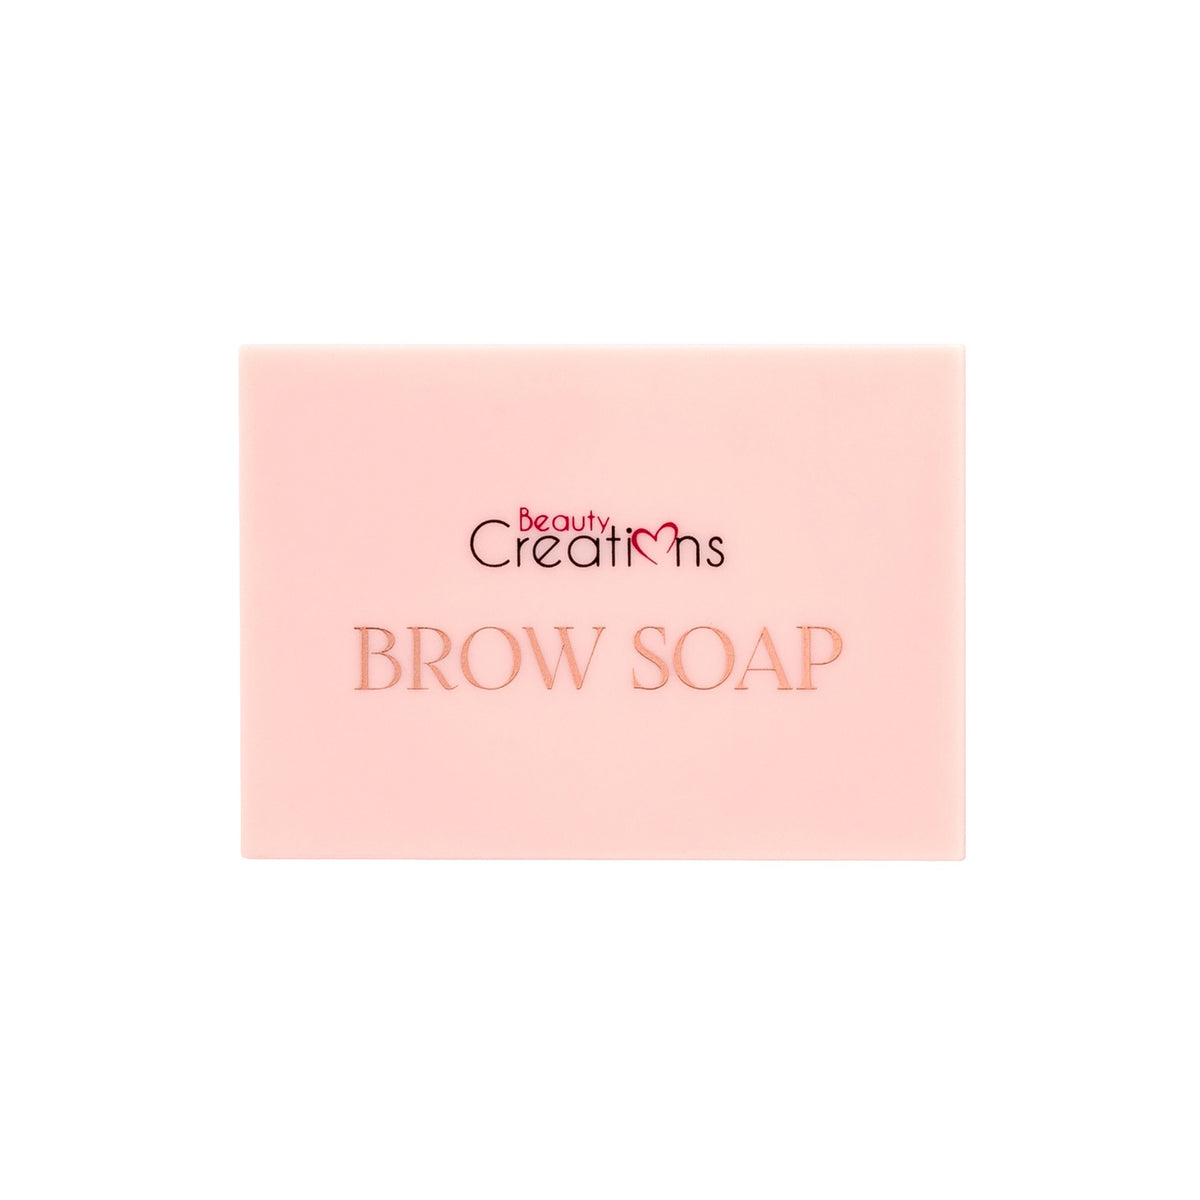 BROW SOAP JABÓN PARA CEJAS - BEAUTY CREATIONS